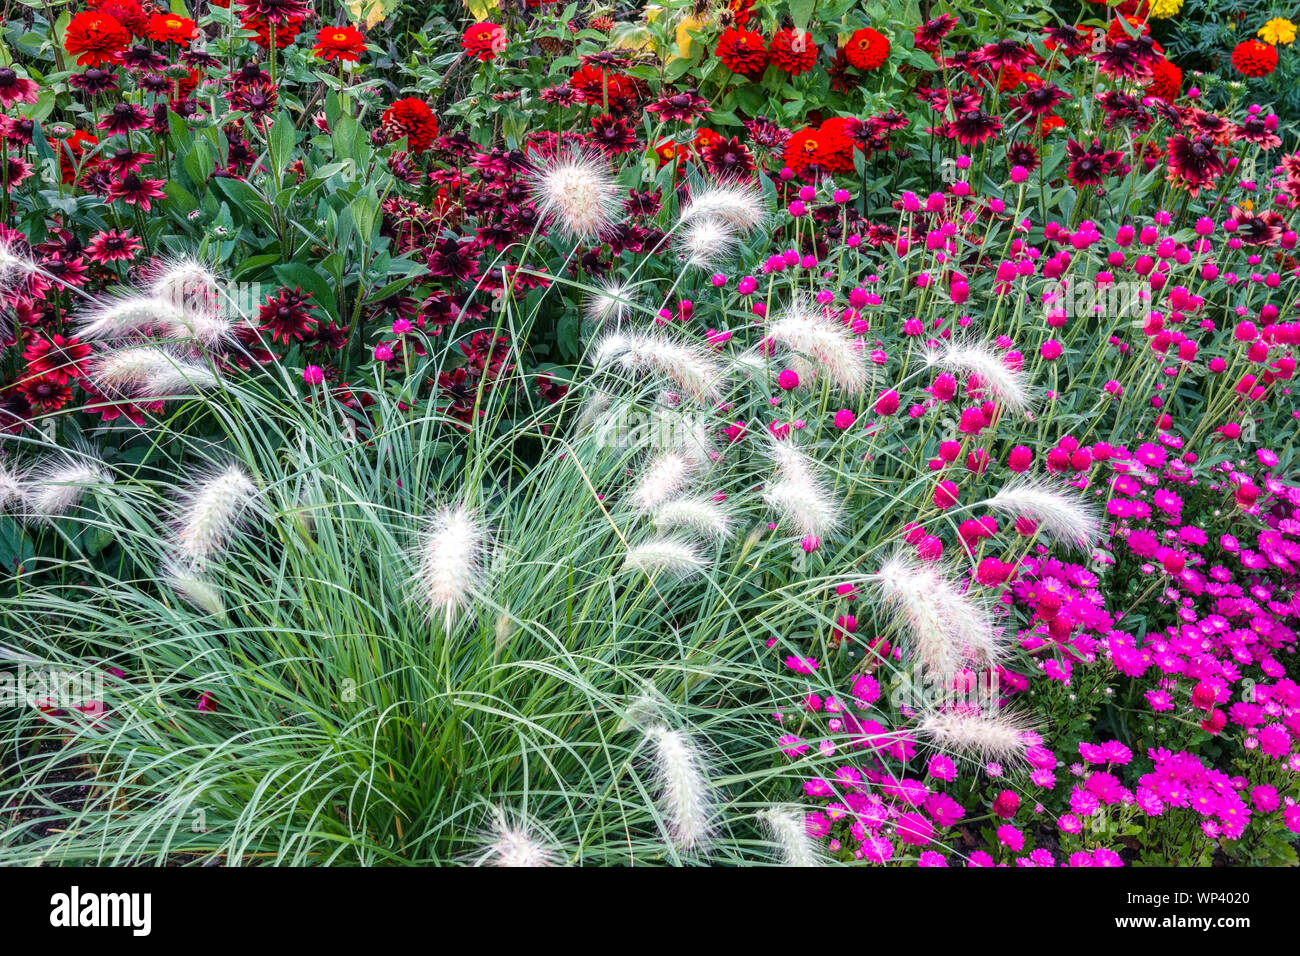 Colorful flower bed, Pennisetum, ornamental grass, purple aster, globe amaranth, Zinnias, Rudbeckia hirta Stock Photo